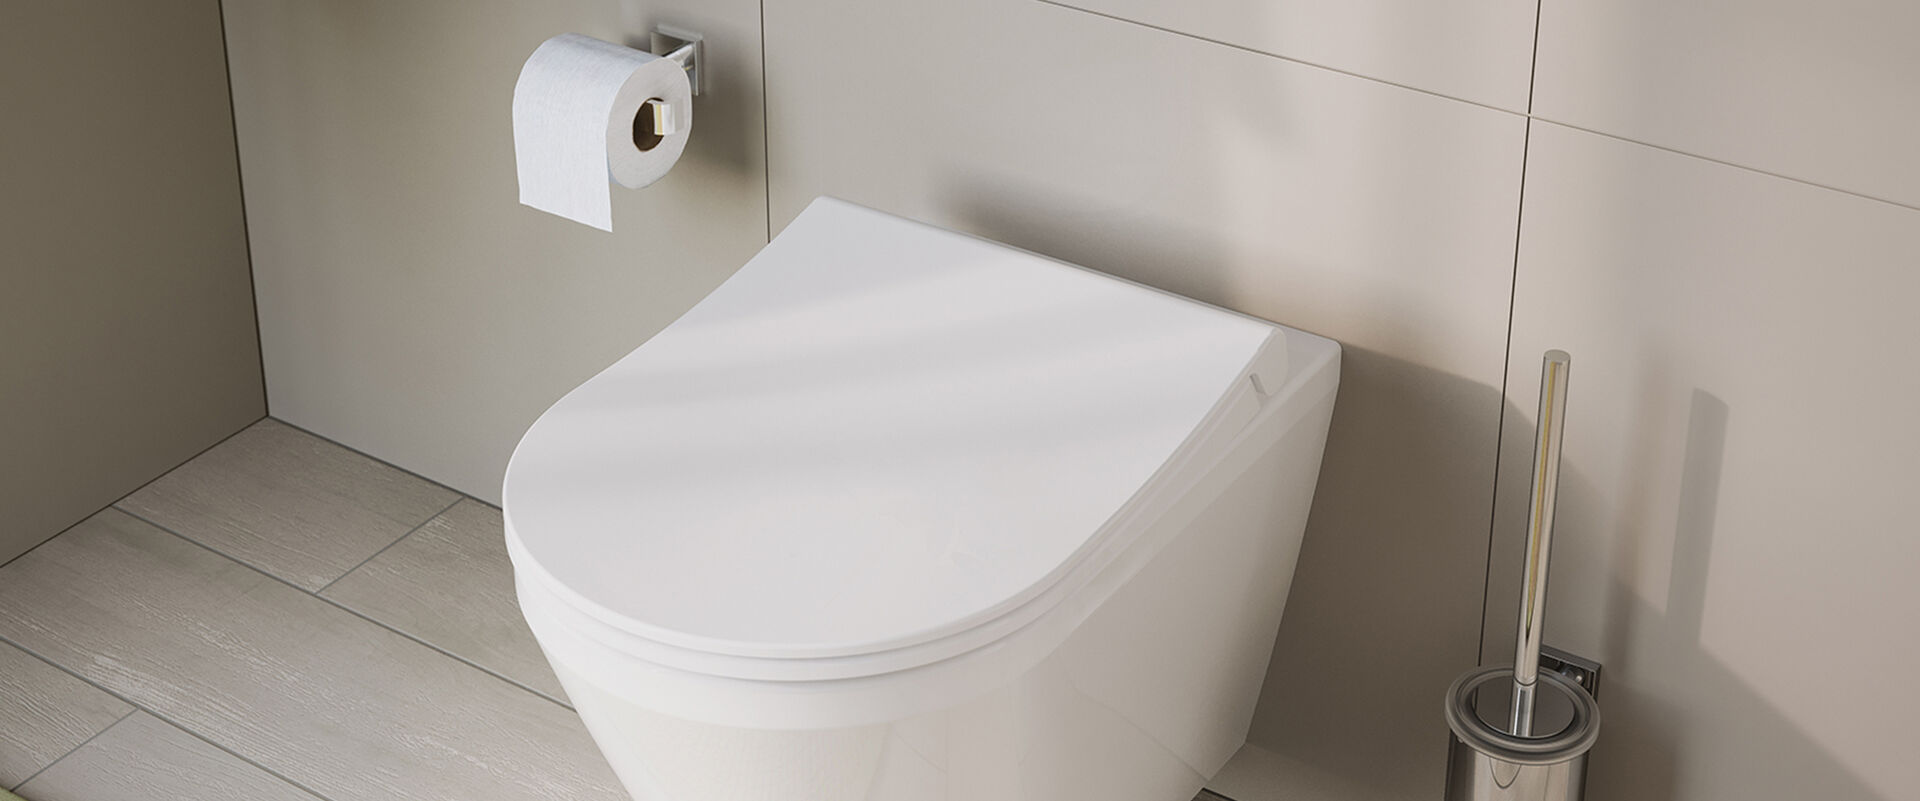 Bidet WC Vitra Aquacare Integra Rueckflussverhinderer Splash Bad